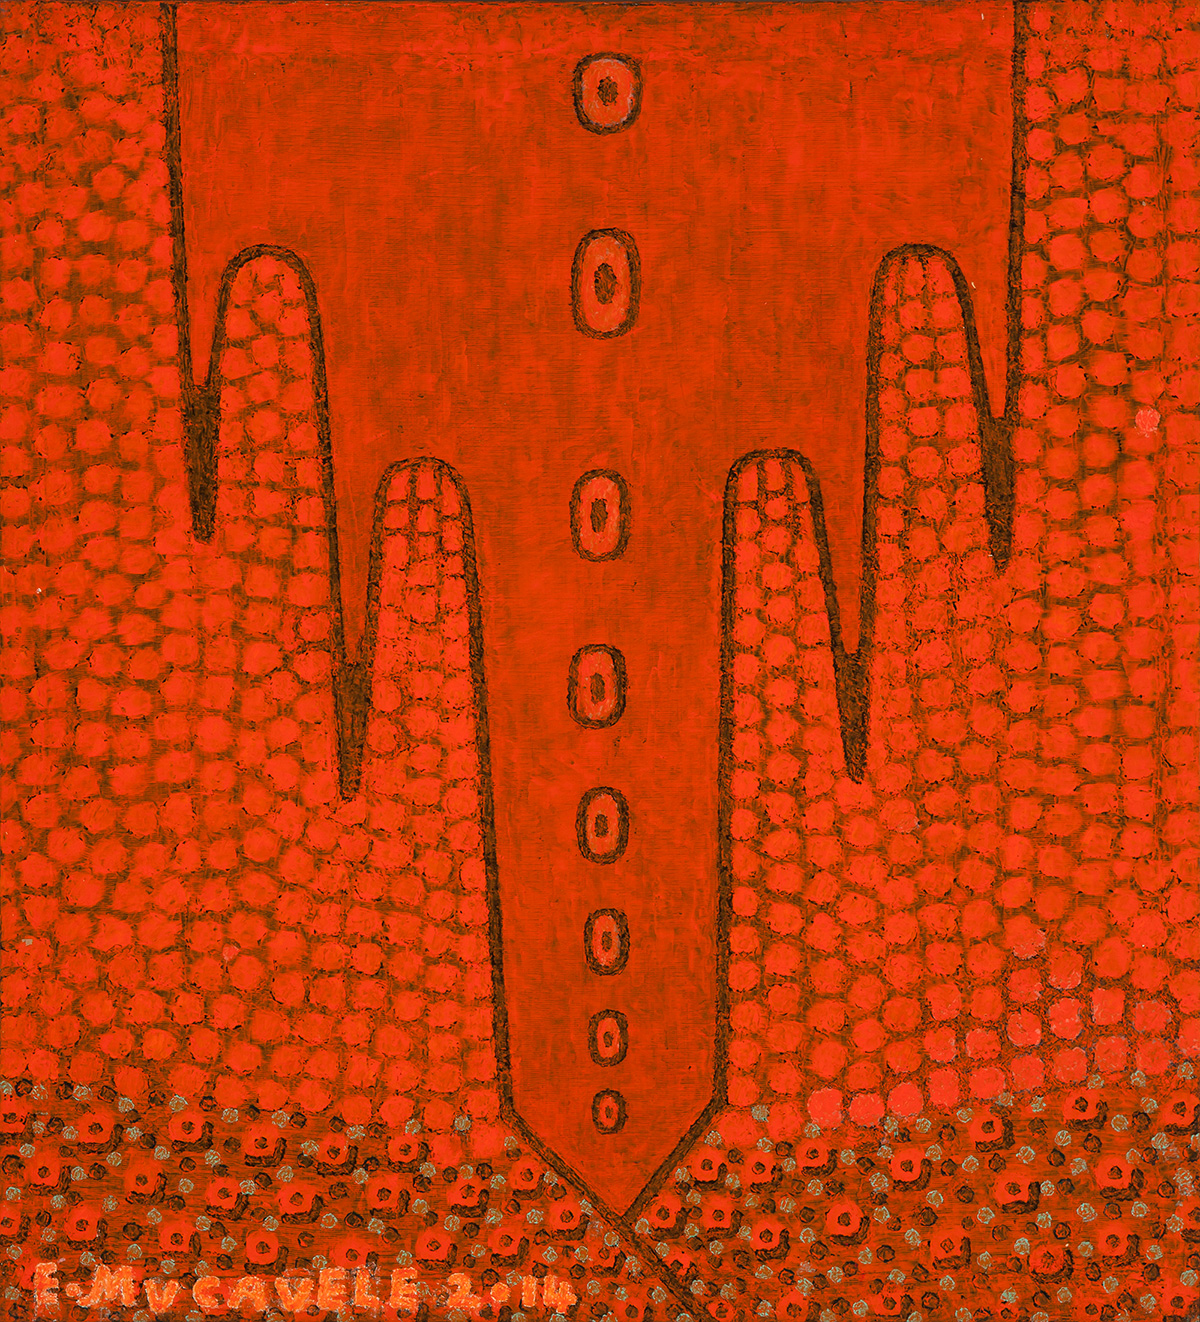 22.04 Estevão Mucavele - Untitled (Orange Mountains and Flowers), 2014